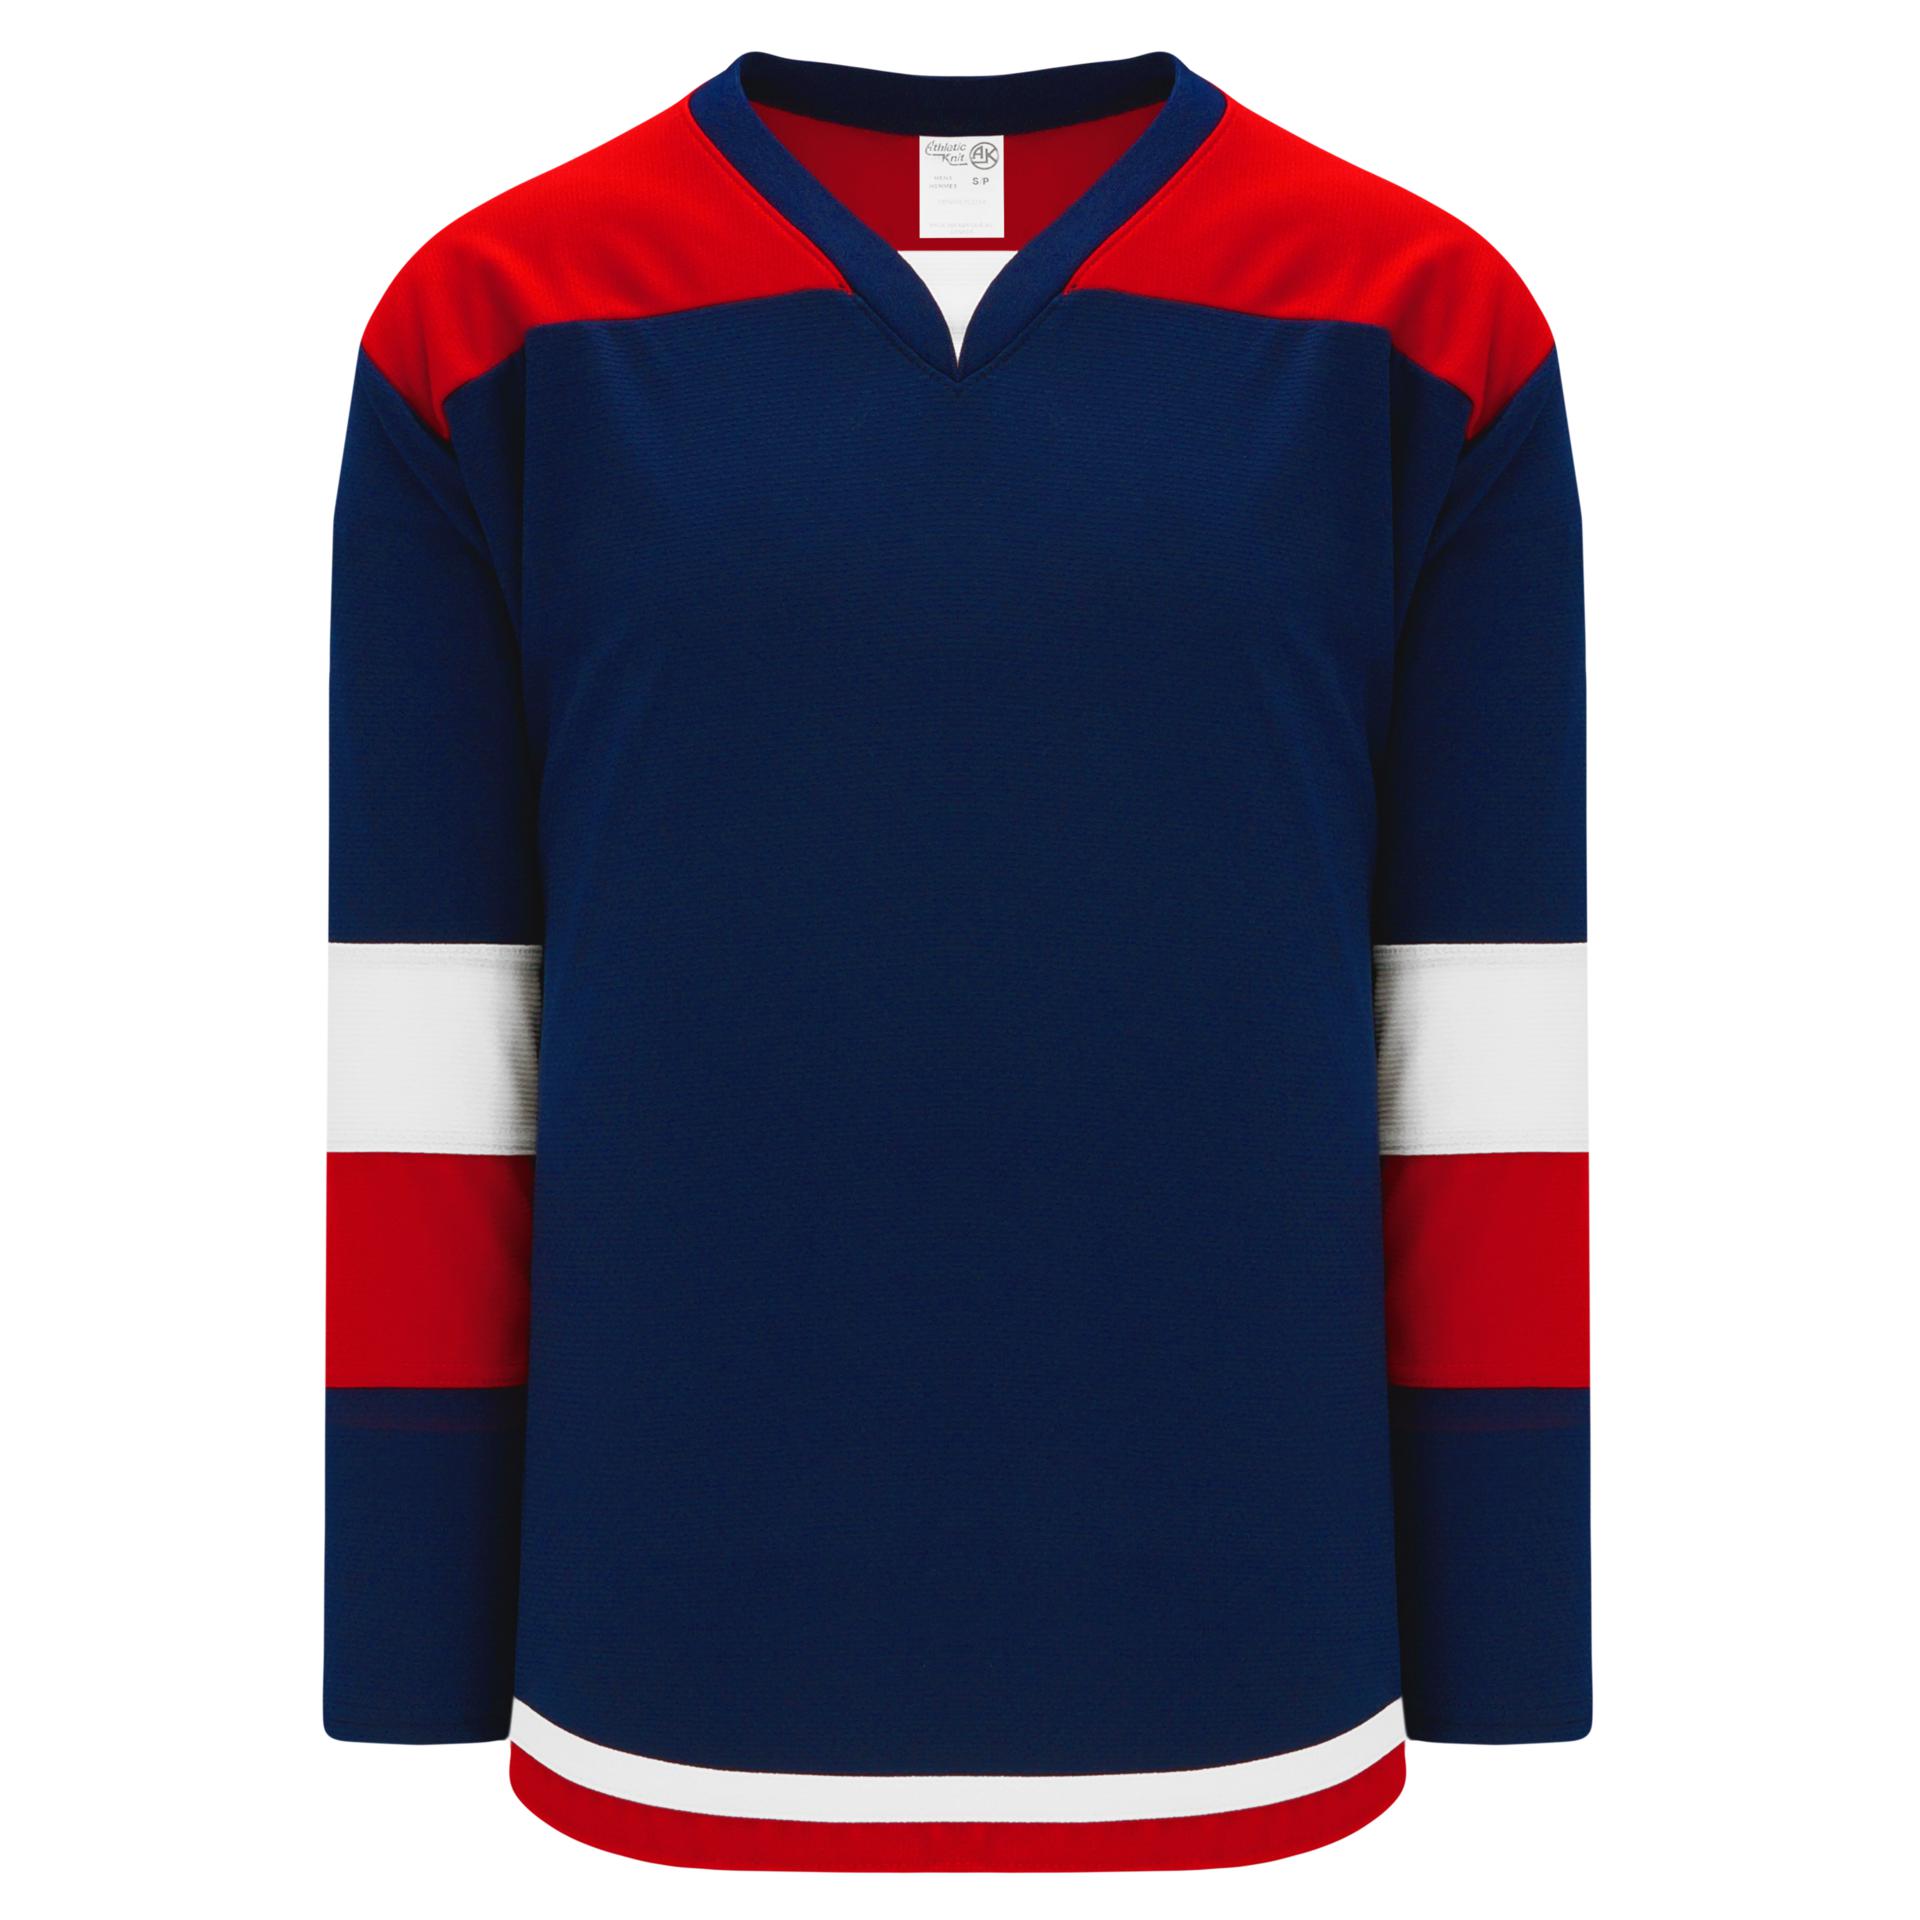 Vintage NHL Ottawa Senators Hockey Jersey / Youth Large / Red, White